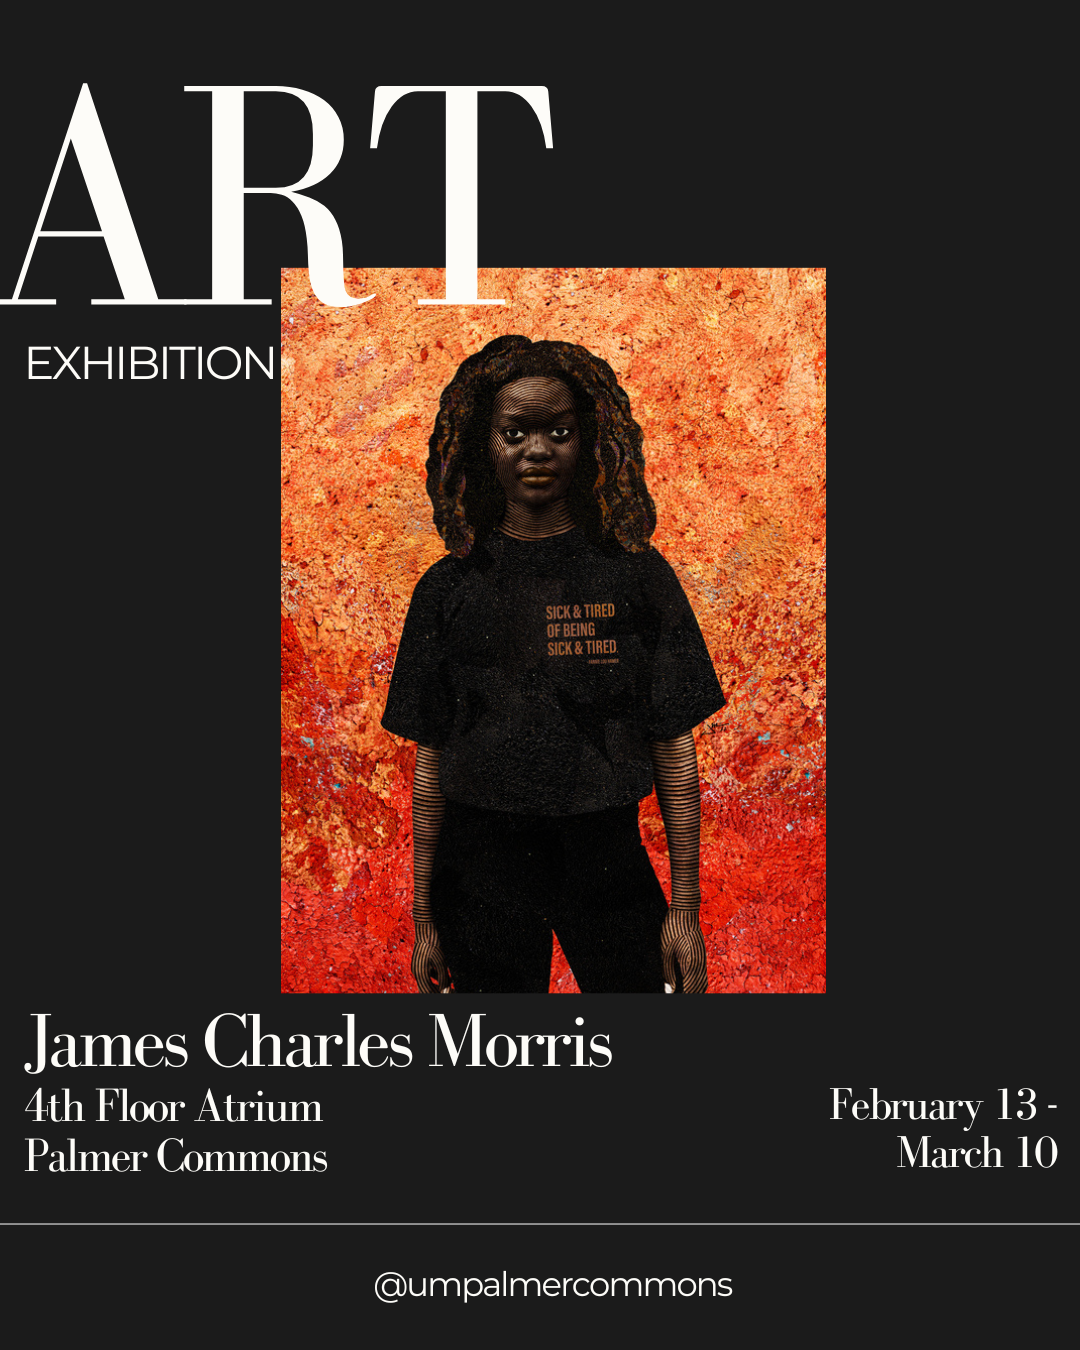 James Charles Morris Art Exhibition Poster